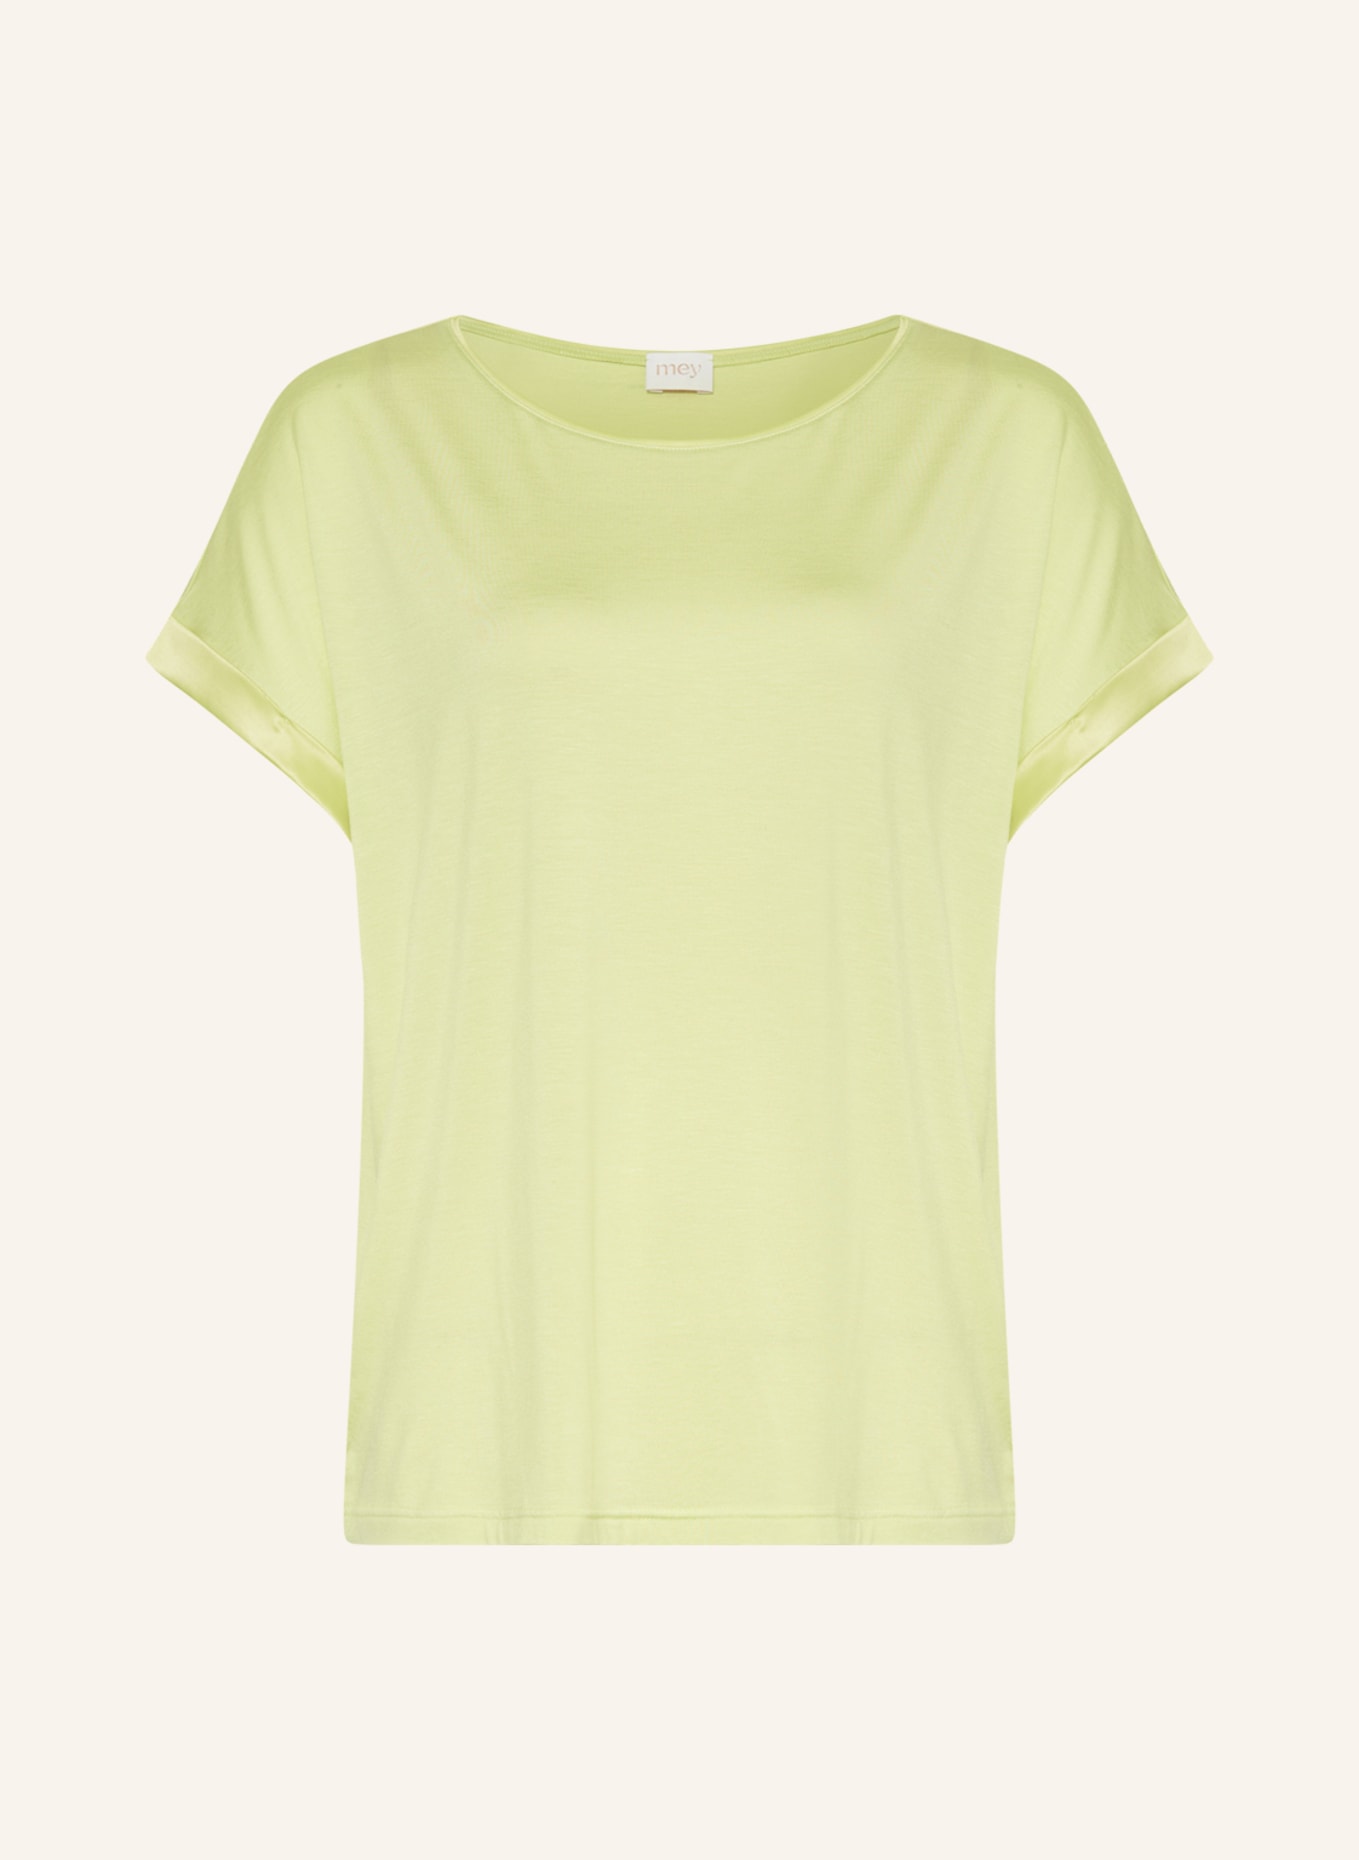 Ночная рубашка mey SchlafSerie ALENA, светло-зеленый